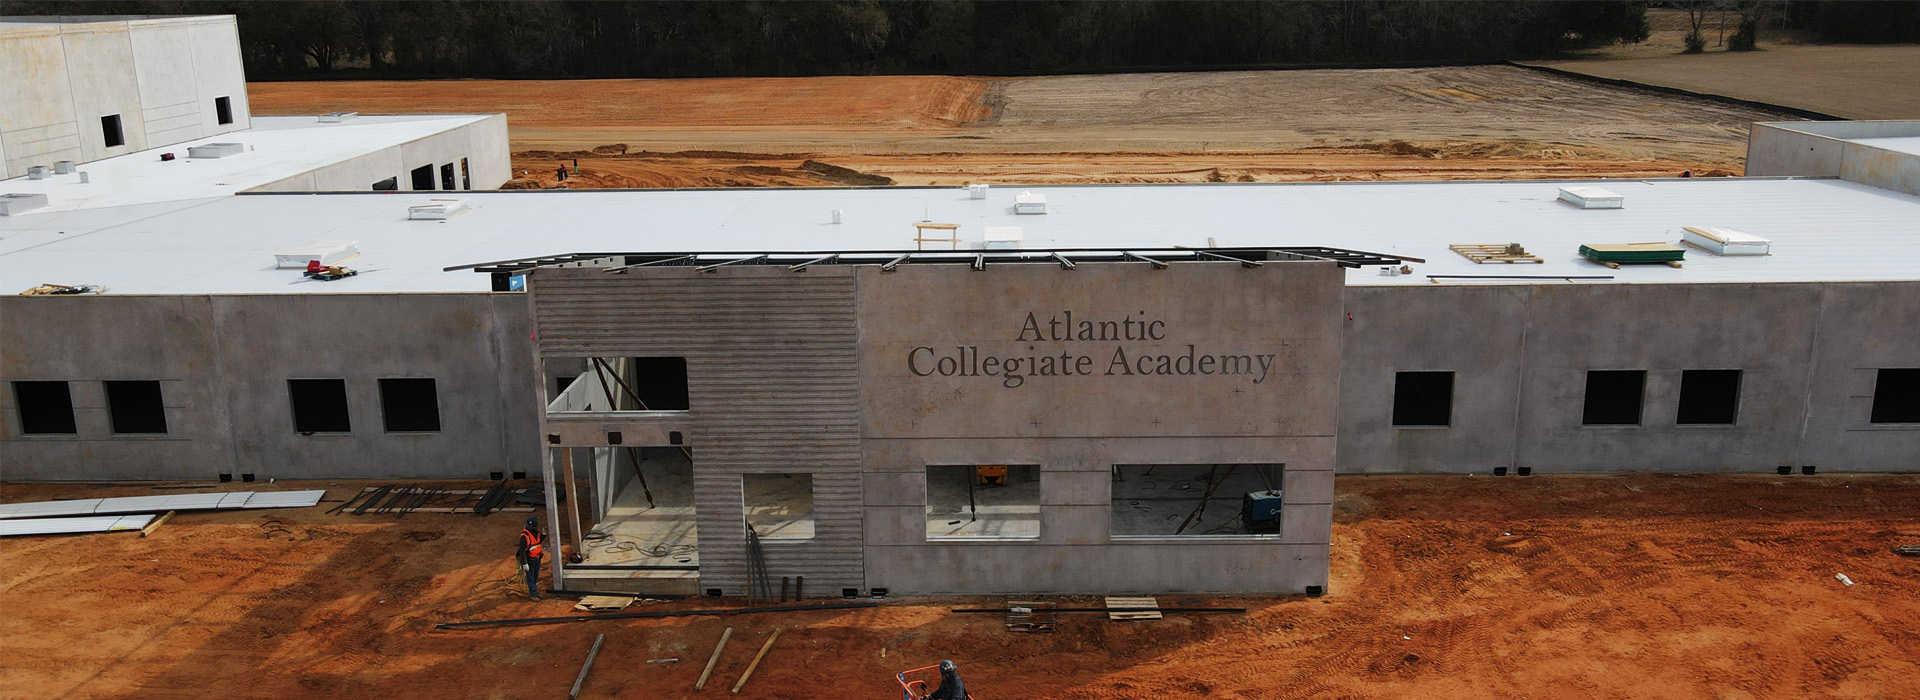 Atlantic Collegiate Academy March Construction